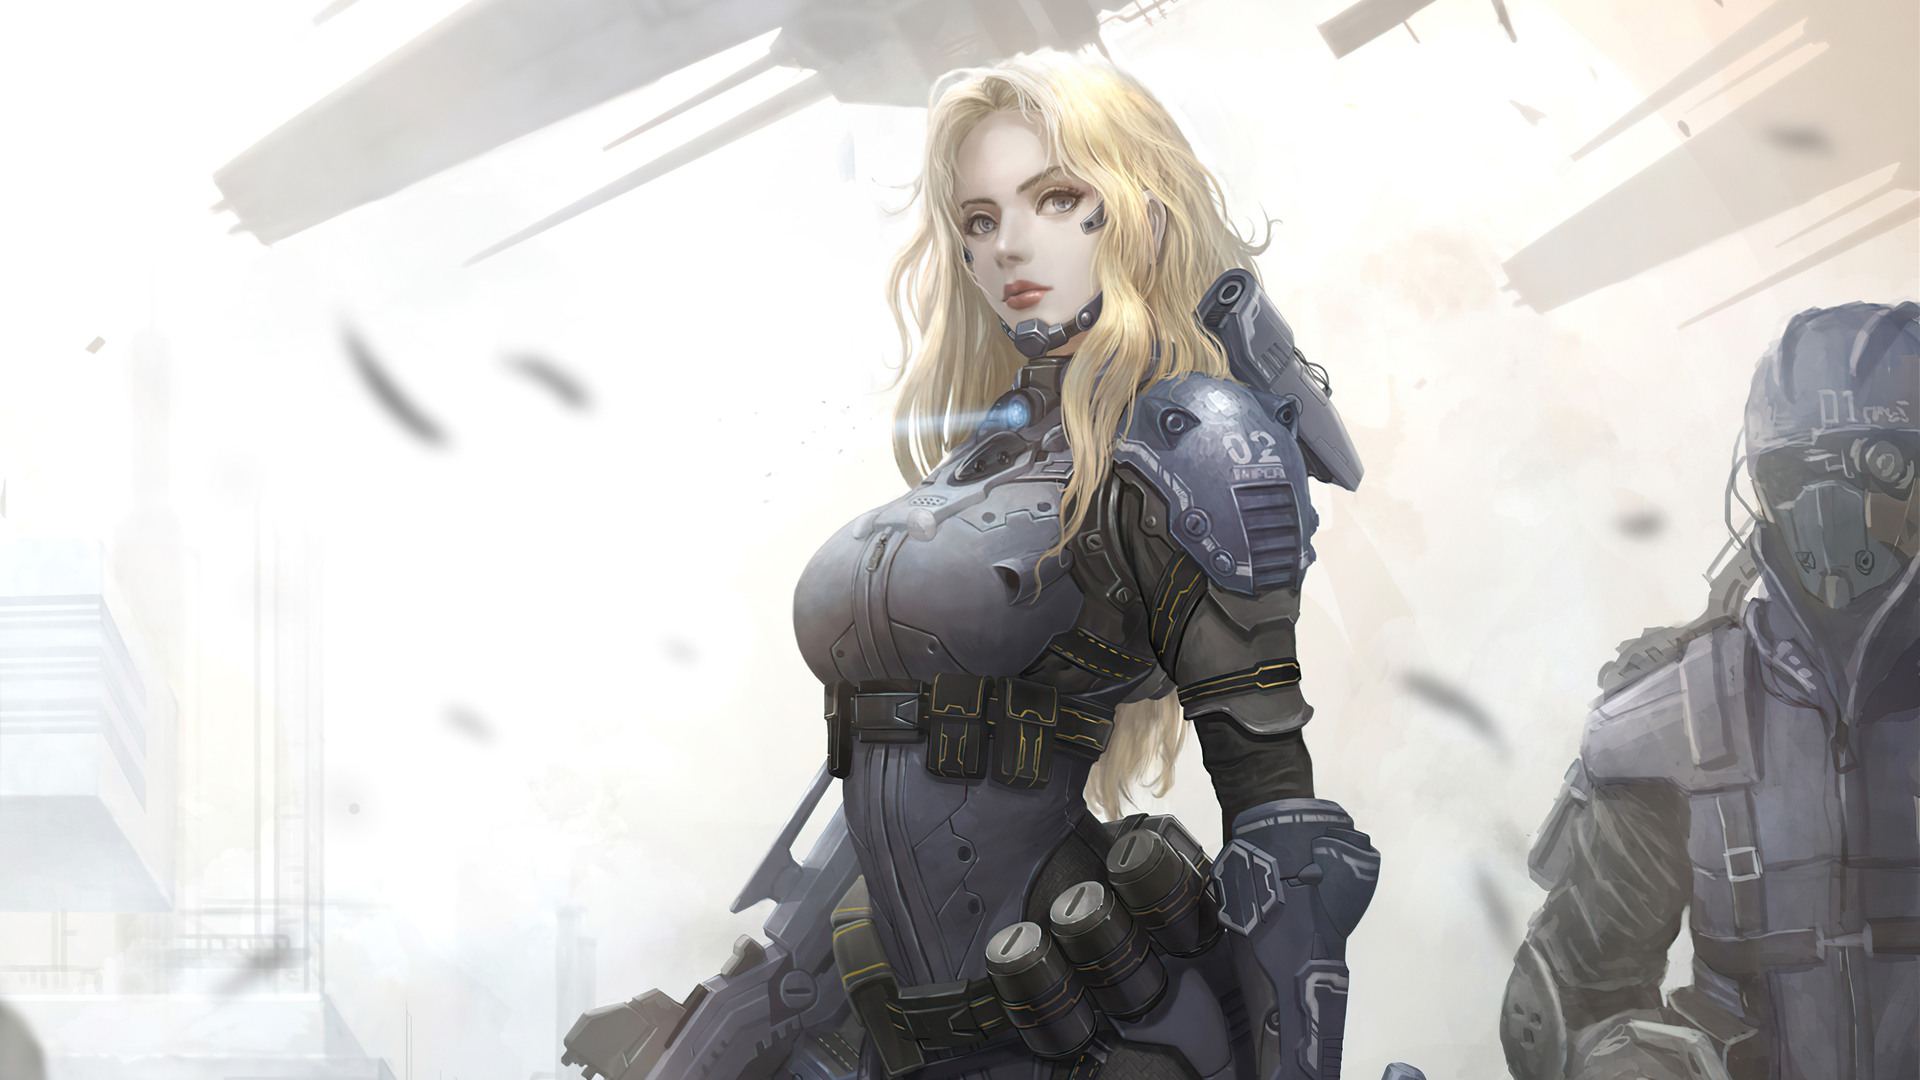 General 1920x1080 science fiction artwork digital art big boobs blonde female soldier soldier